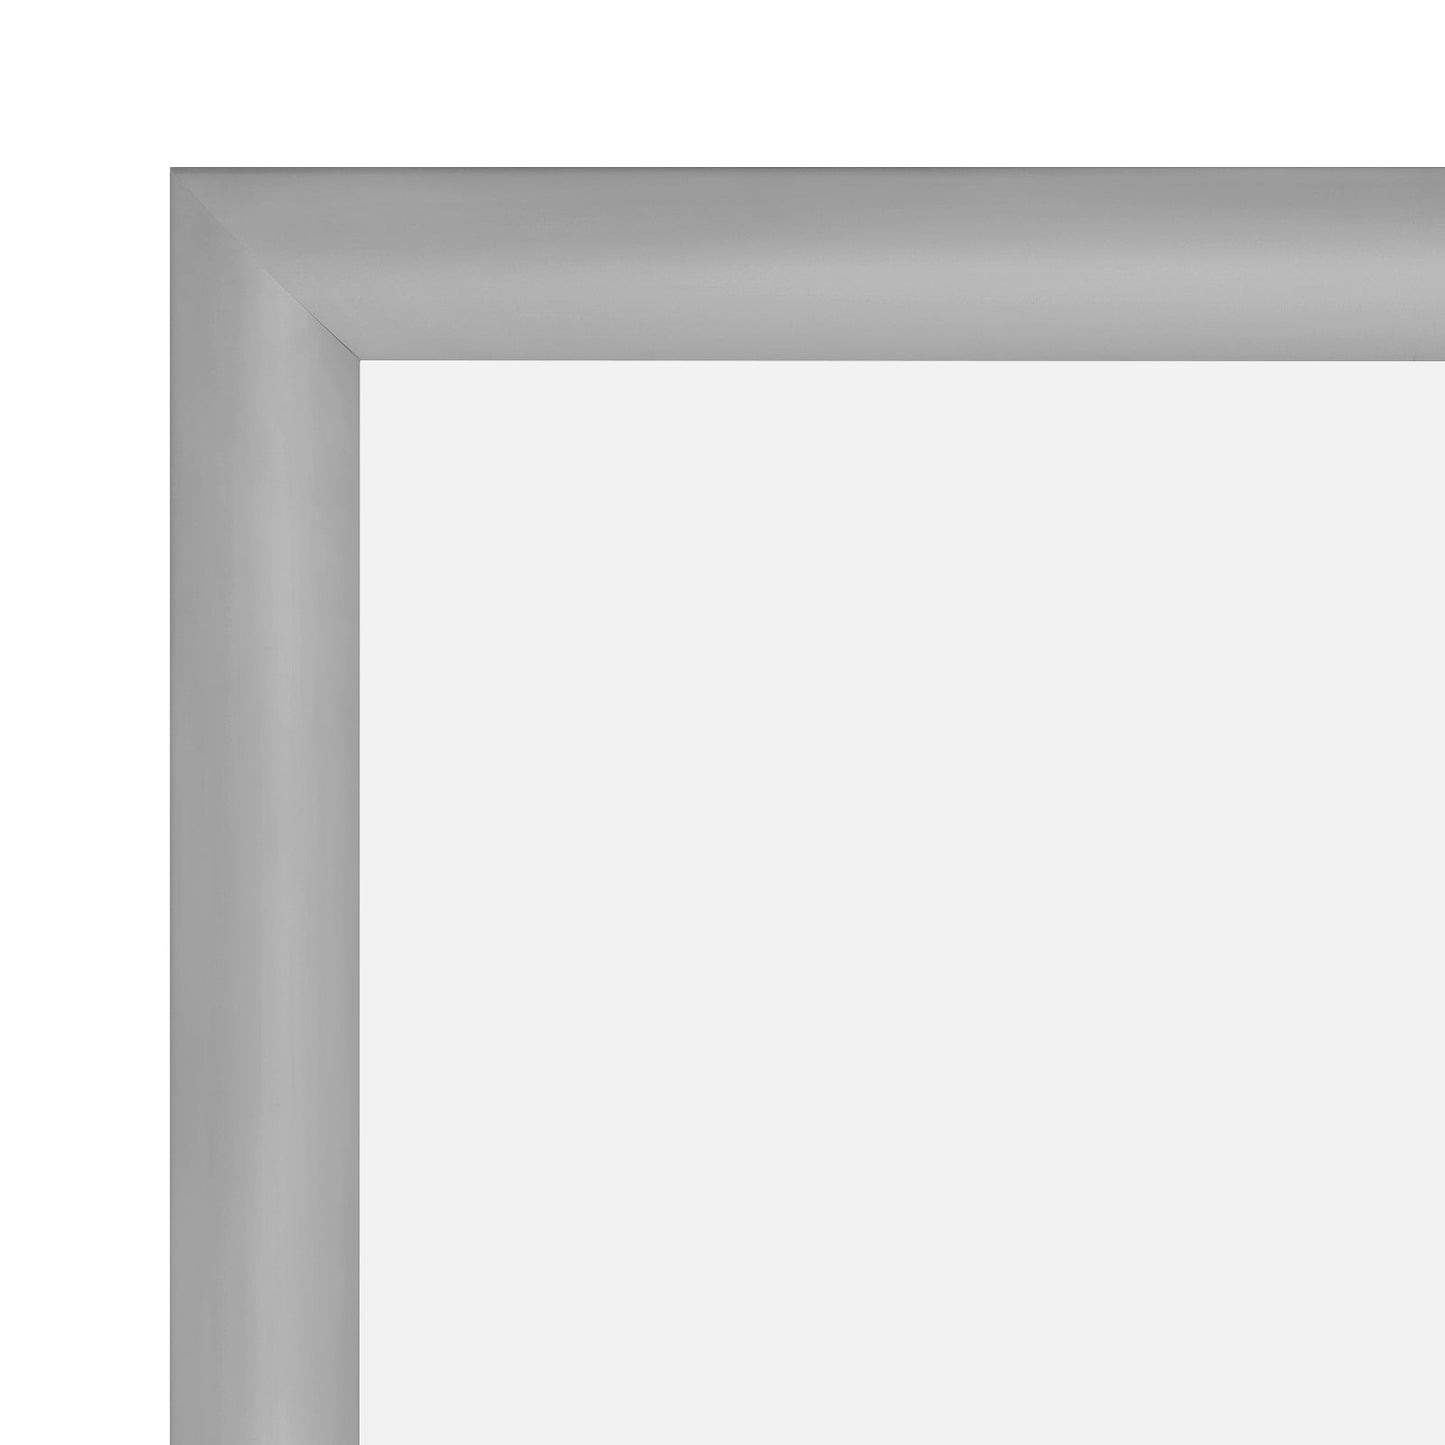 14x21 Silver SnapeZo® Snap Frame - 1.2" Profile